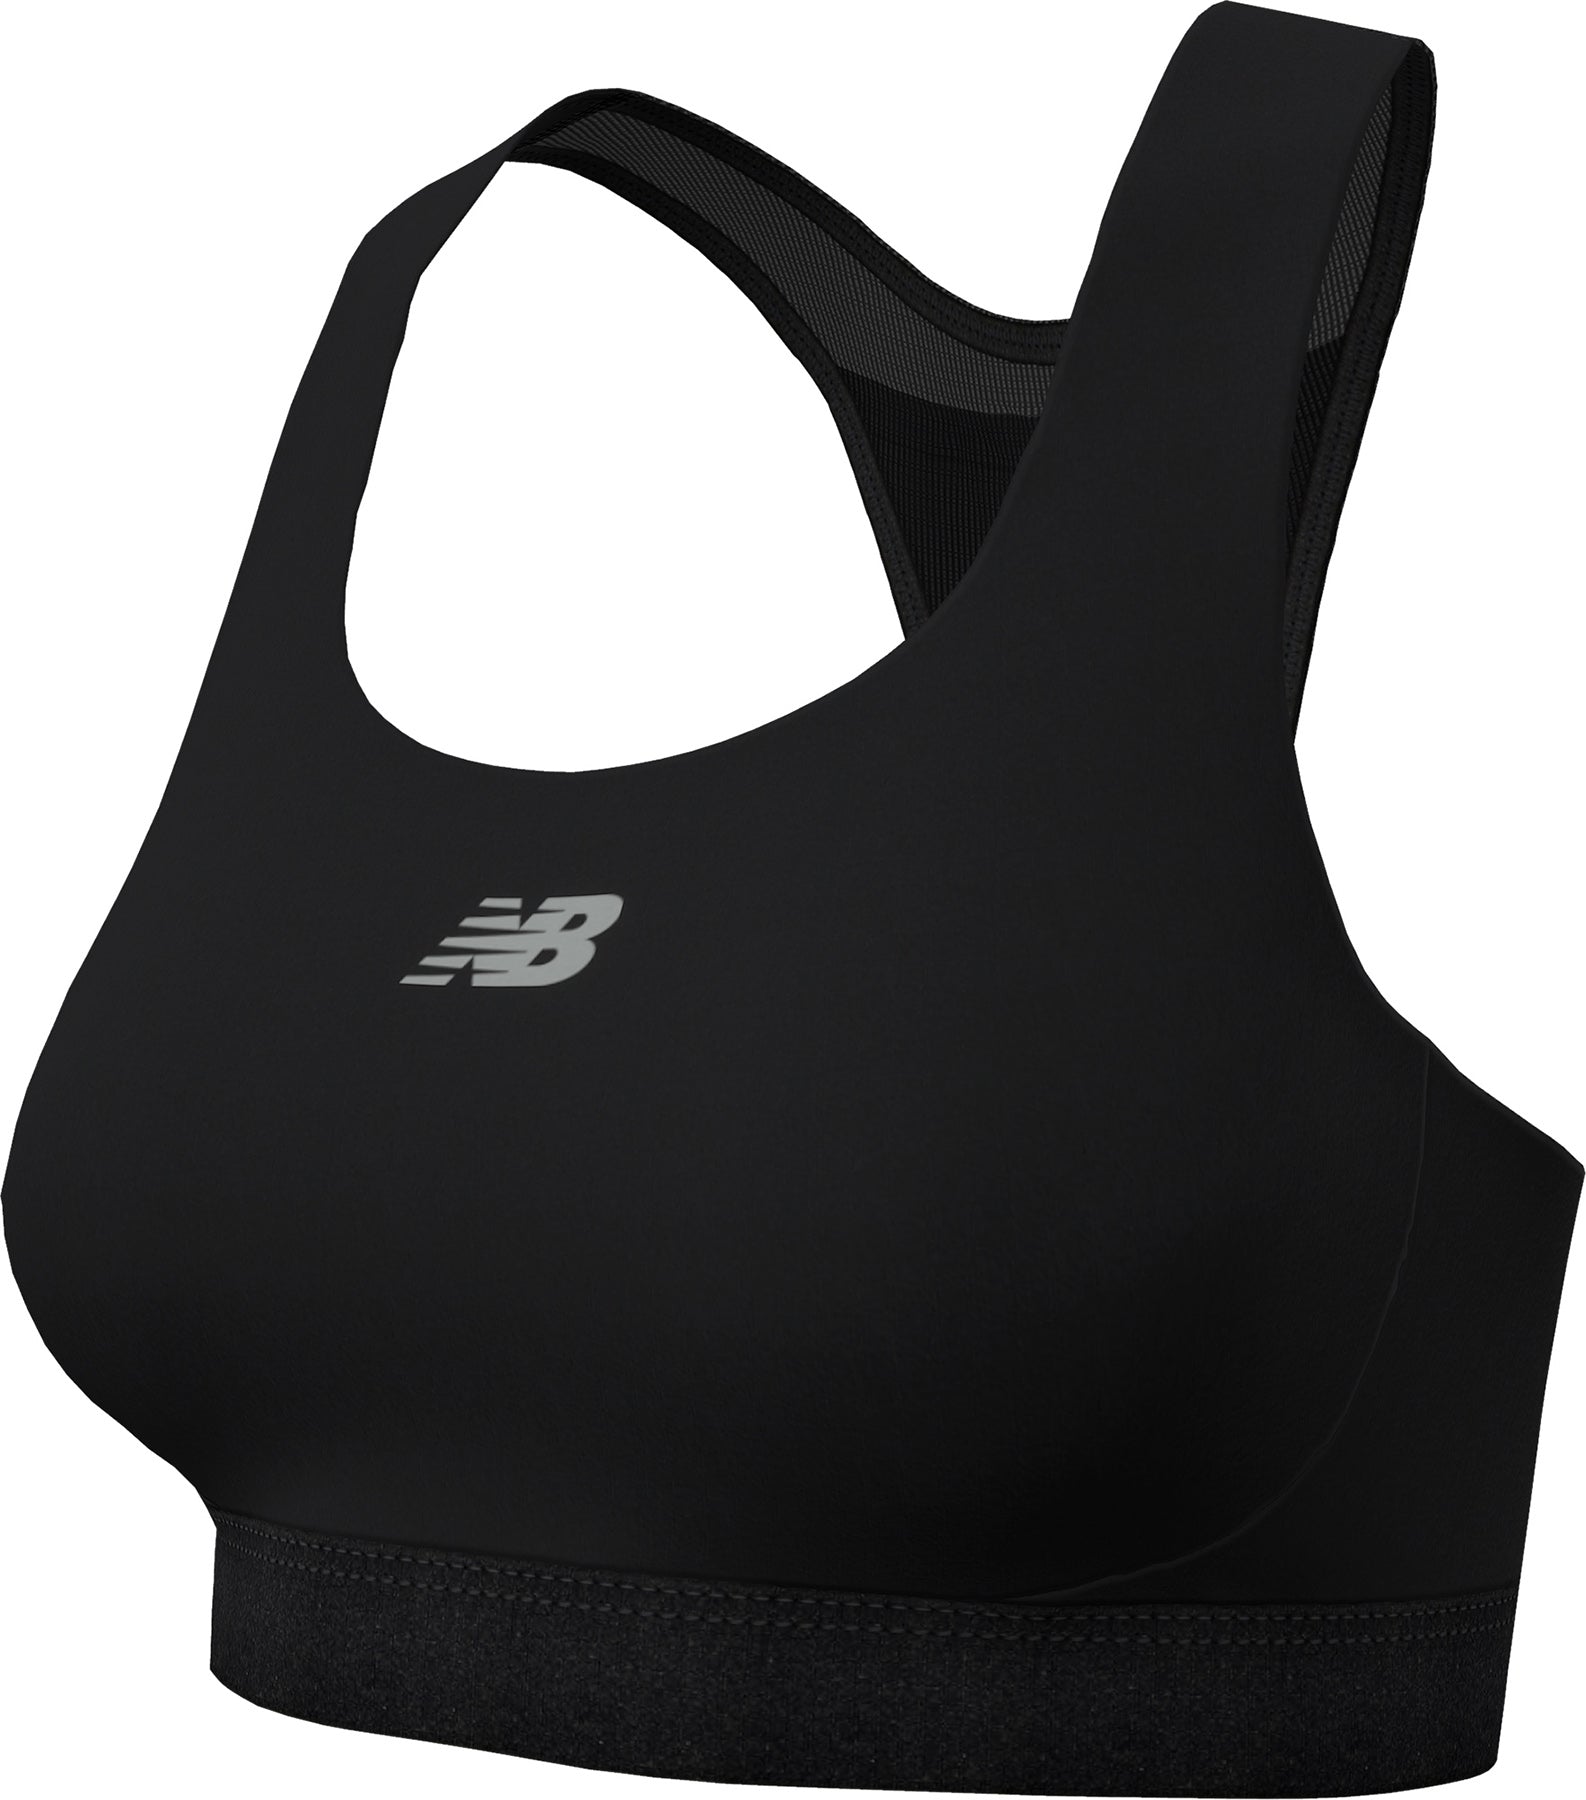 Women's NB Sleek Medium Support Pocket Sports Bra Apparel - New